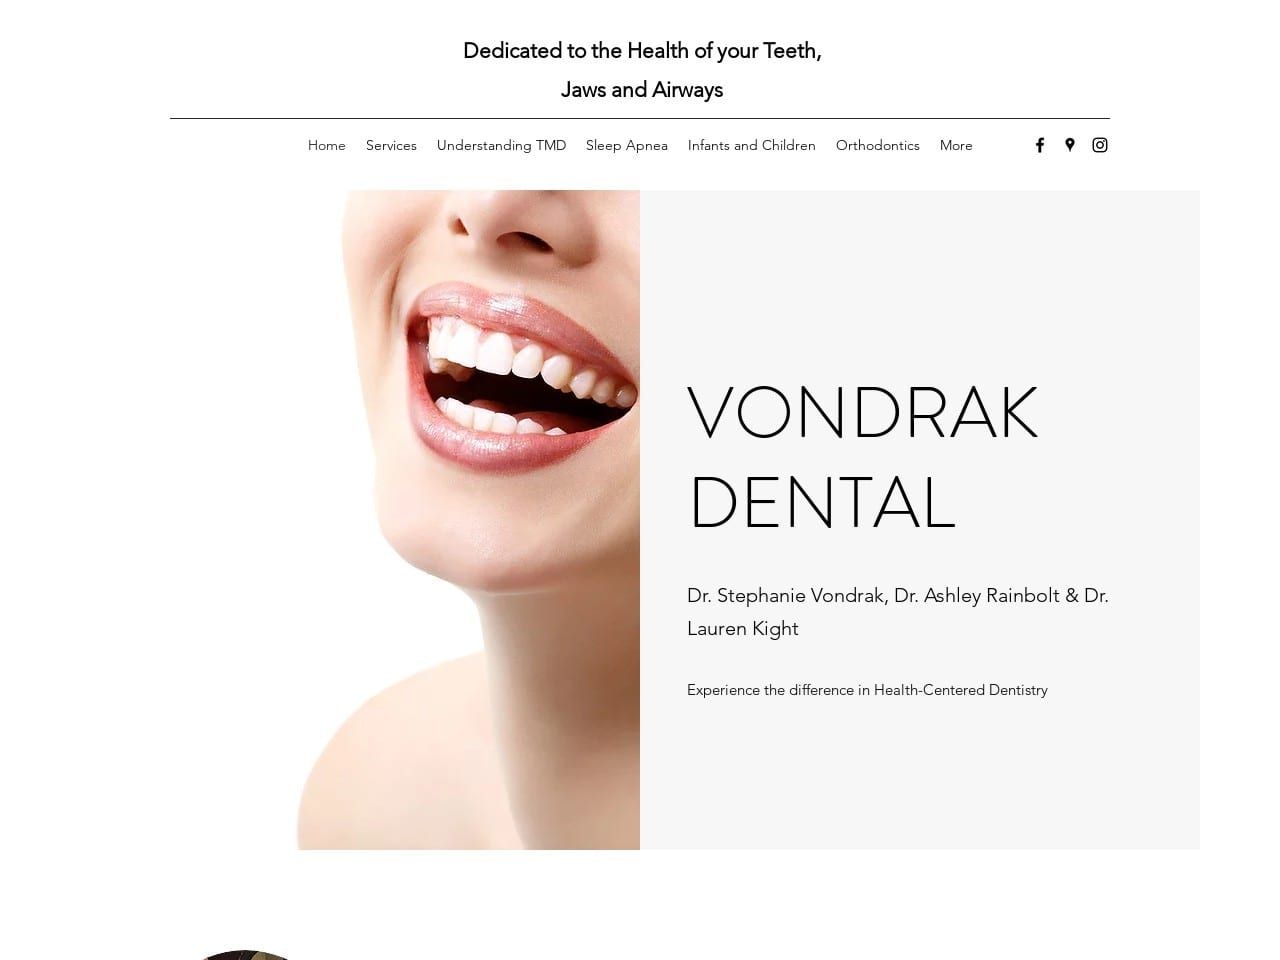 Vondrak Dental Website Screenshot from drvondrak.com